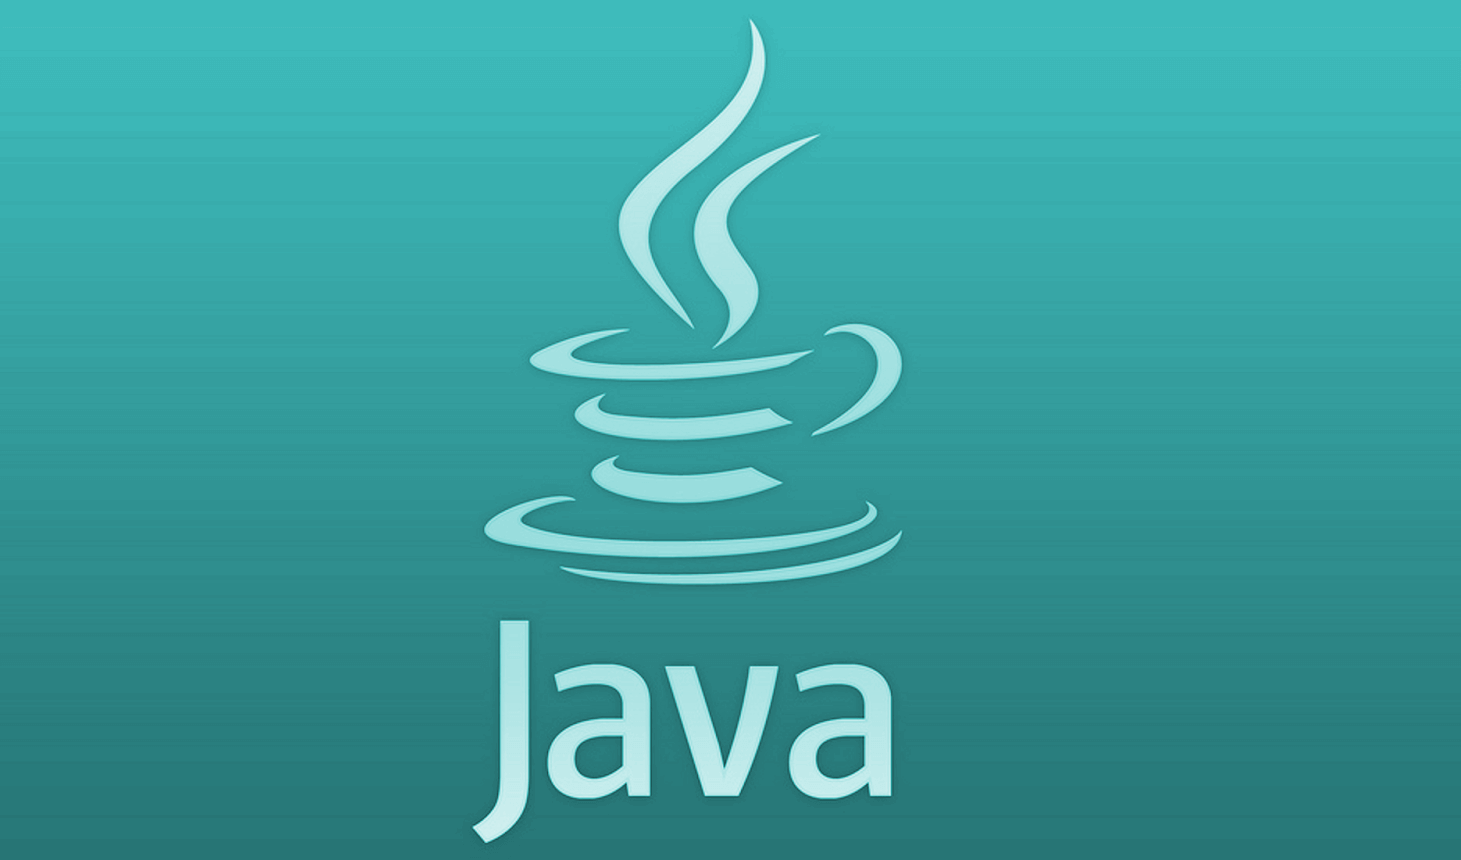 Java language information in Marathi